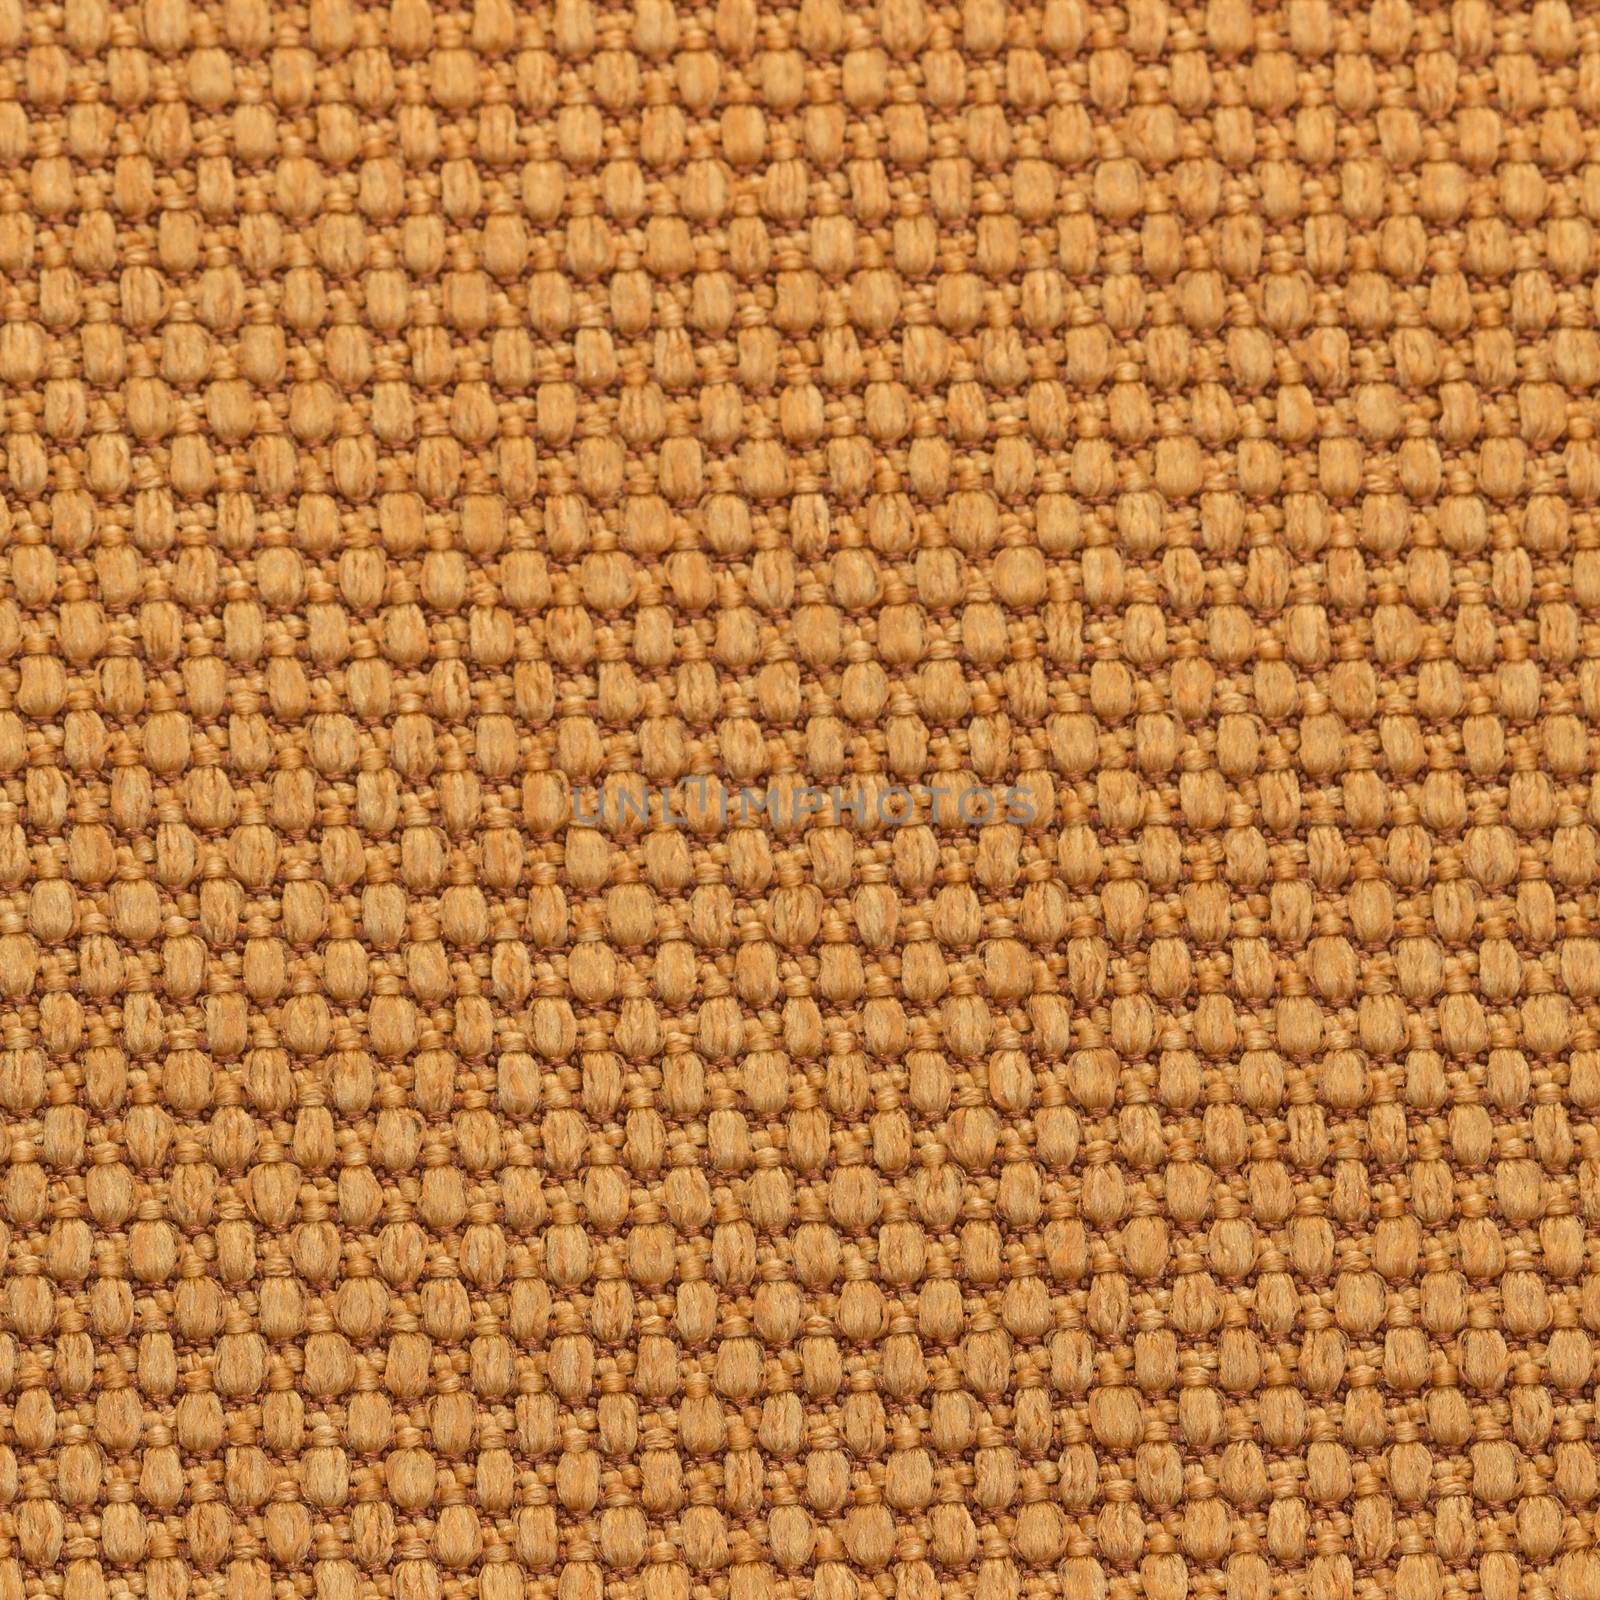 Rustic canvas fabric texture in orange color. Square shape